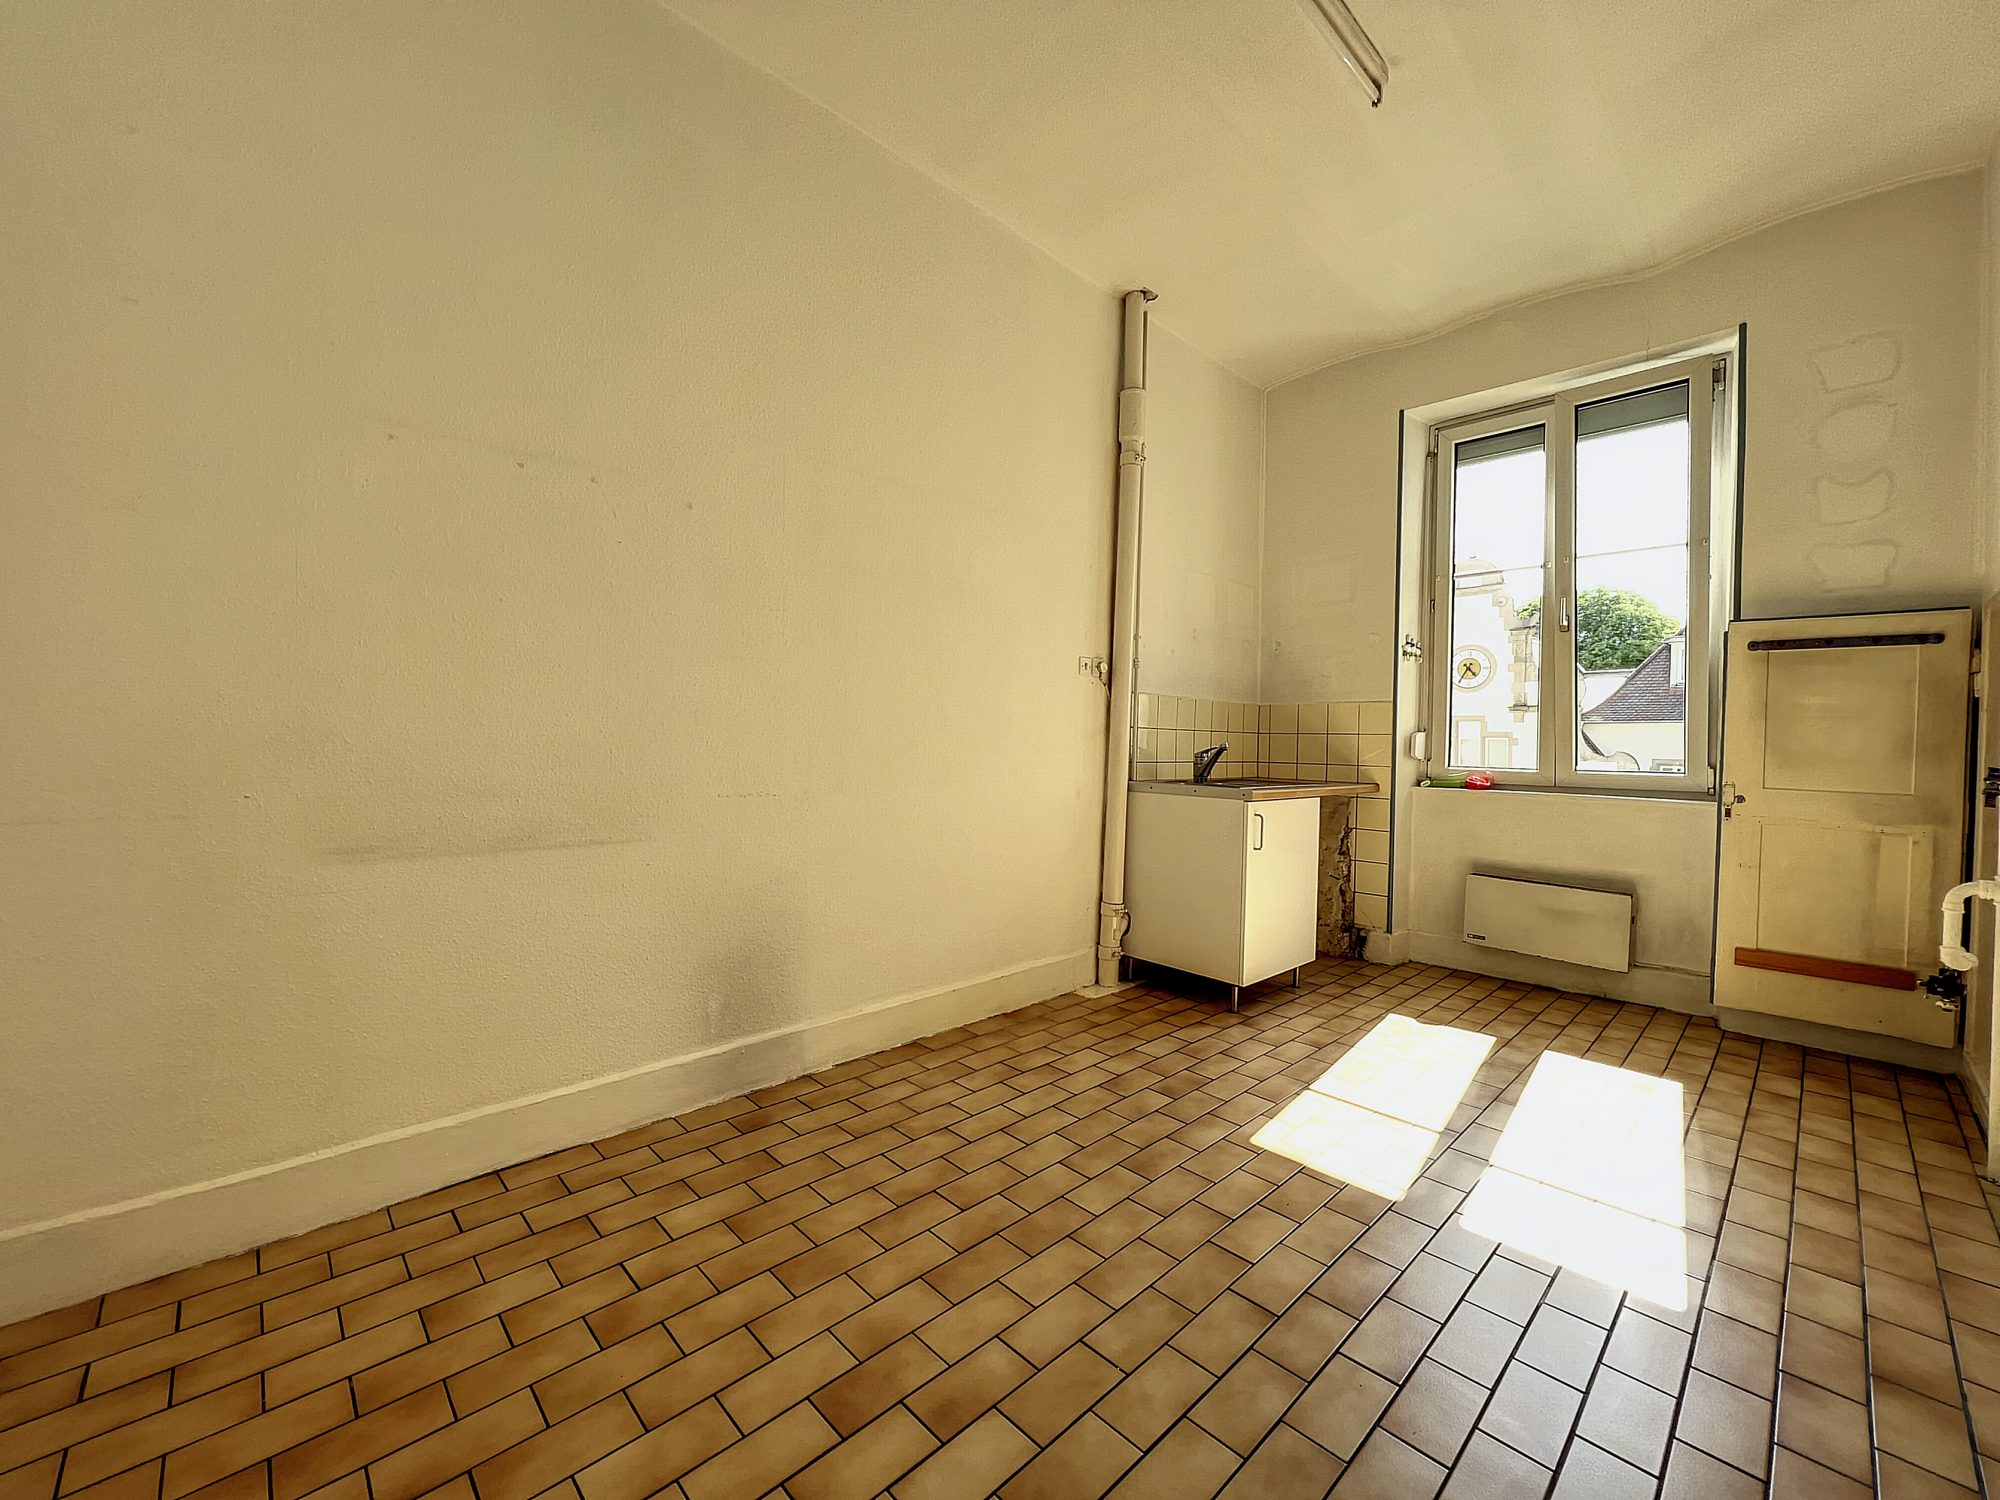 4 pièces à rénover NEUSTADT - achat appartement Strasbourg - Bintz Immobilier - 9